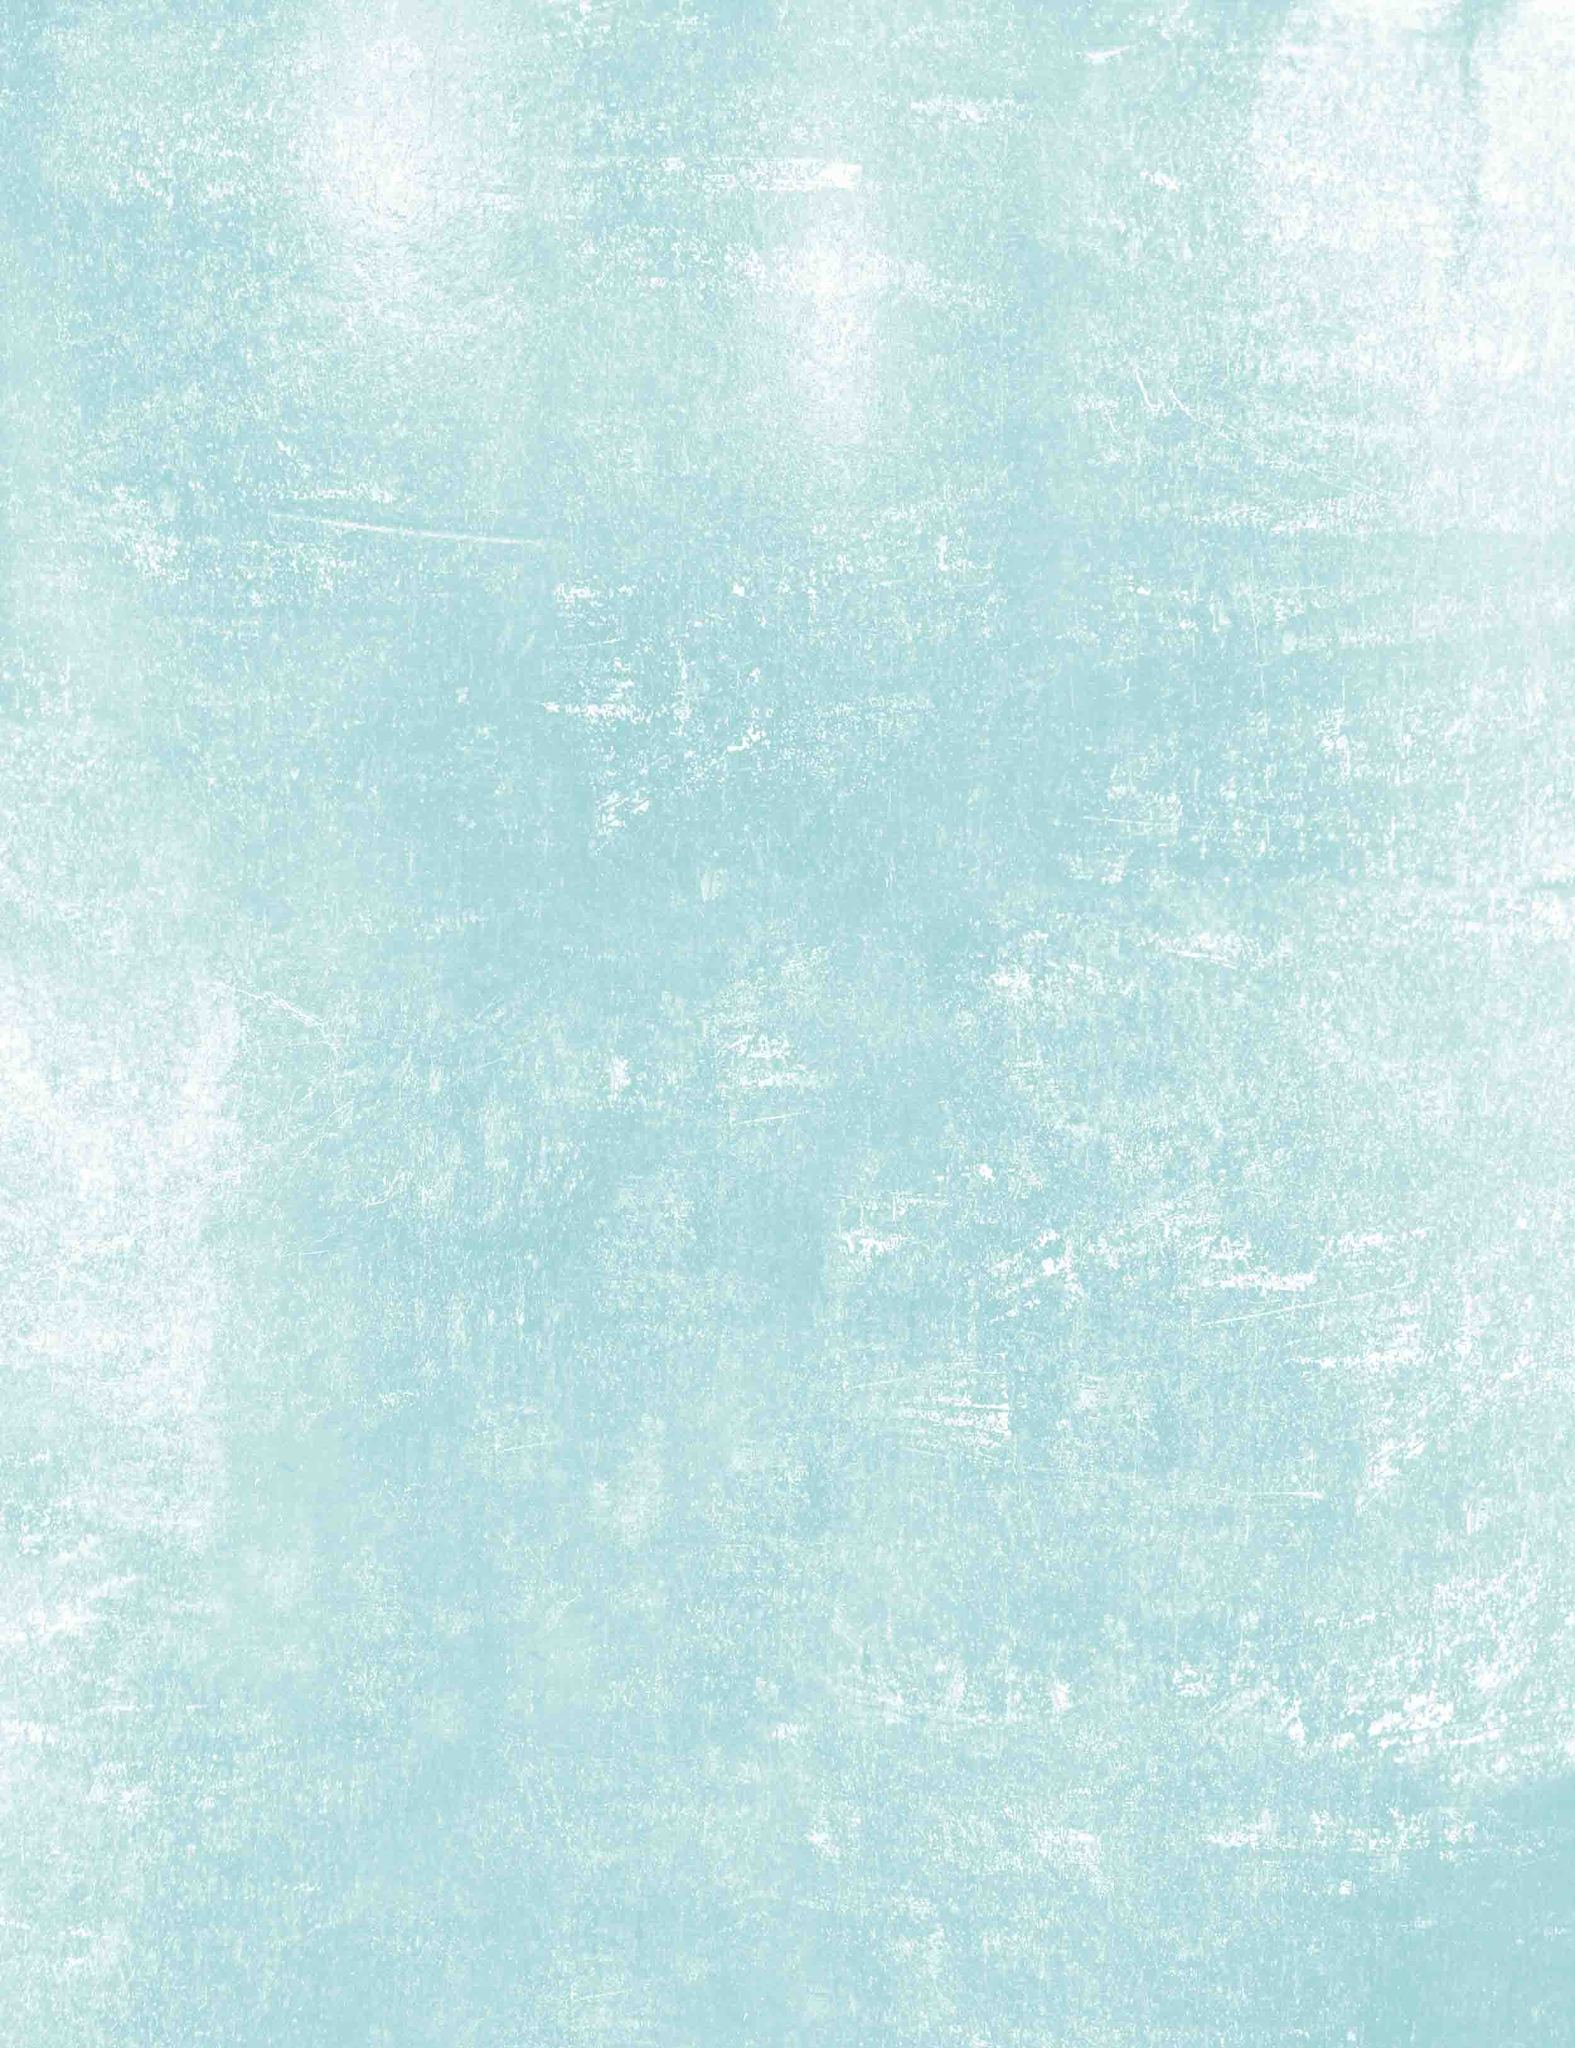 Pale Blue Little White Wall Texture Photography Backdrop – Shopbackdrop